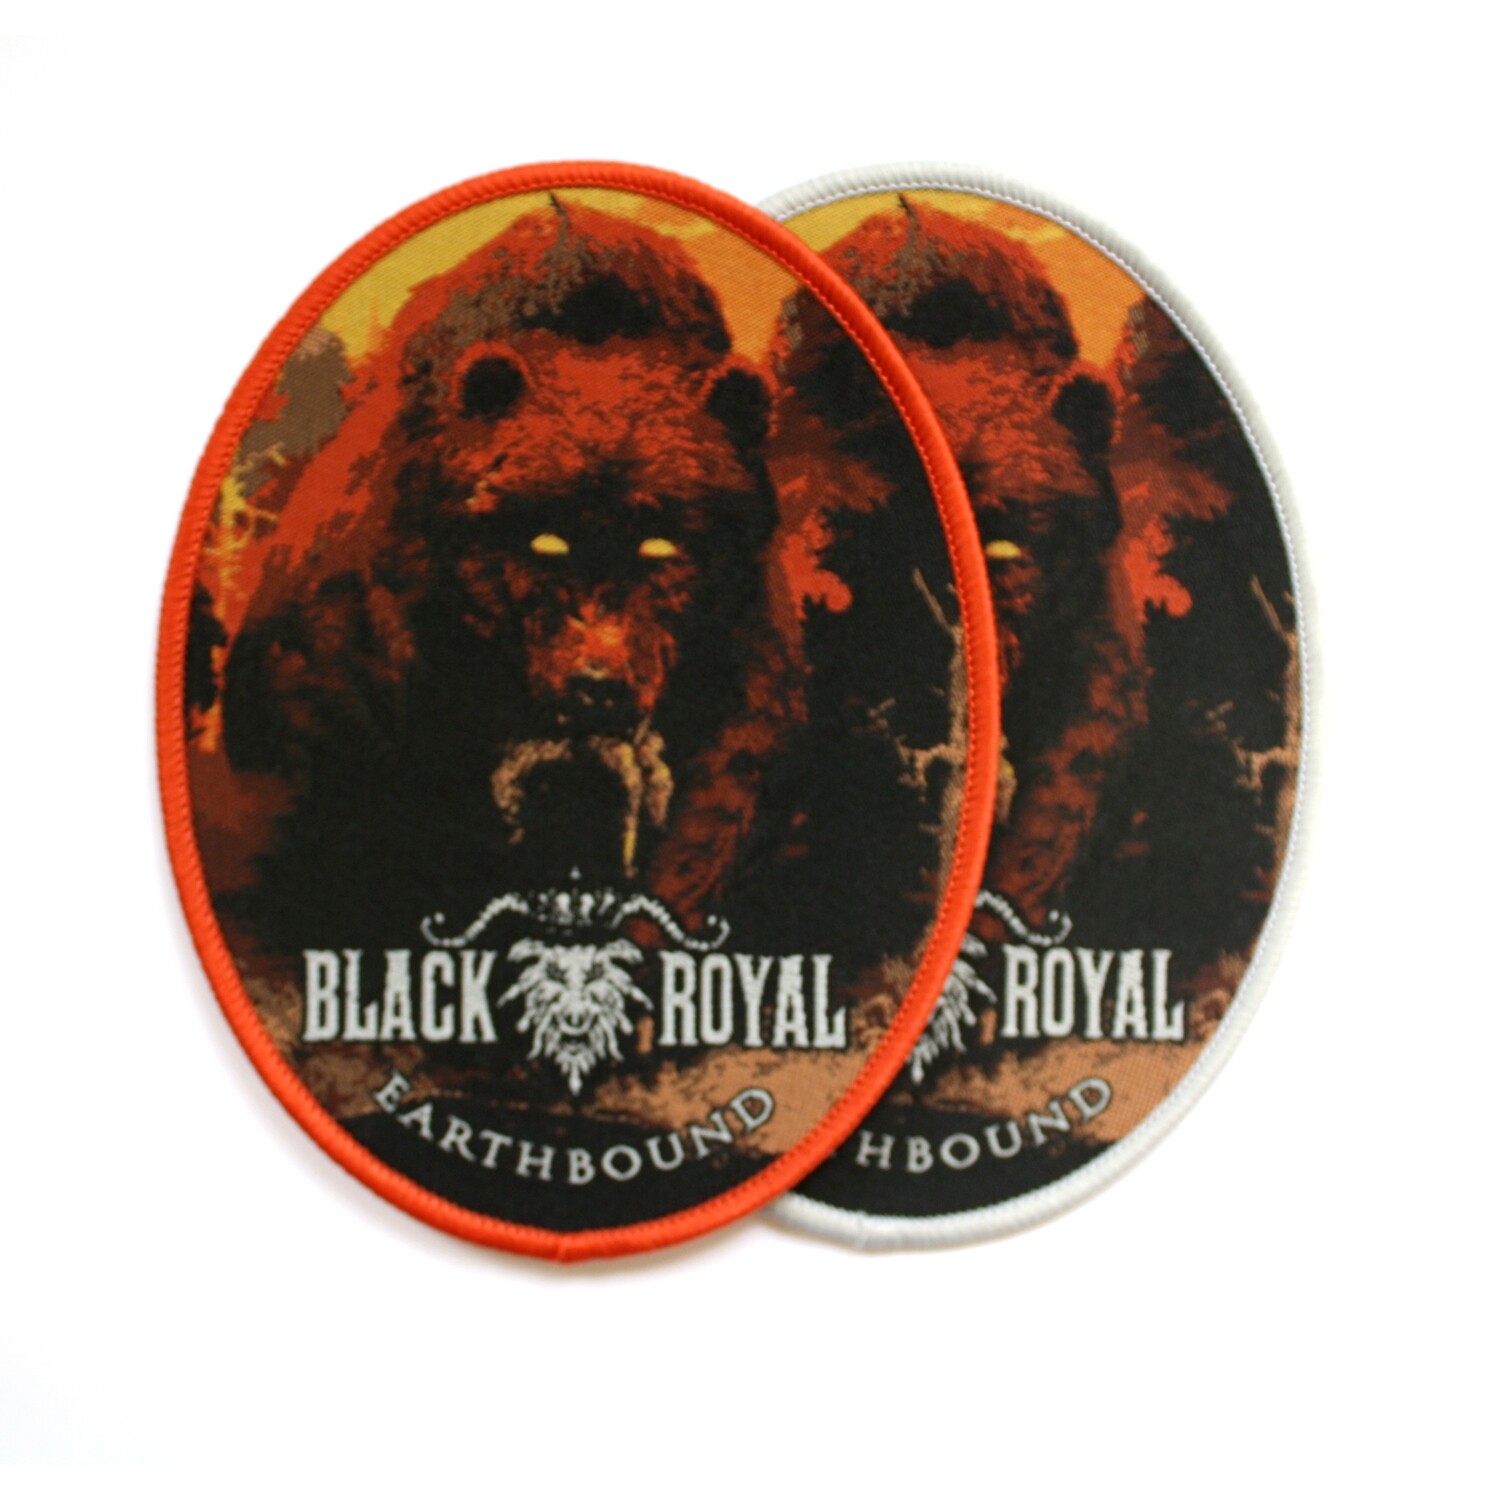 Black Royal - Earthbound